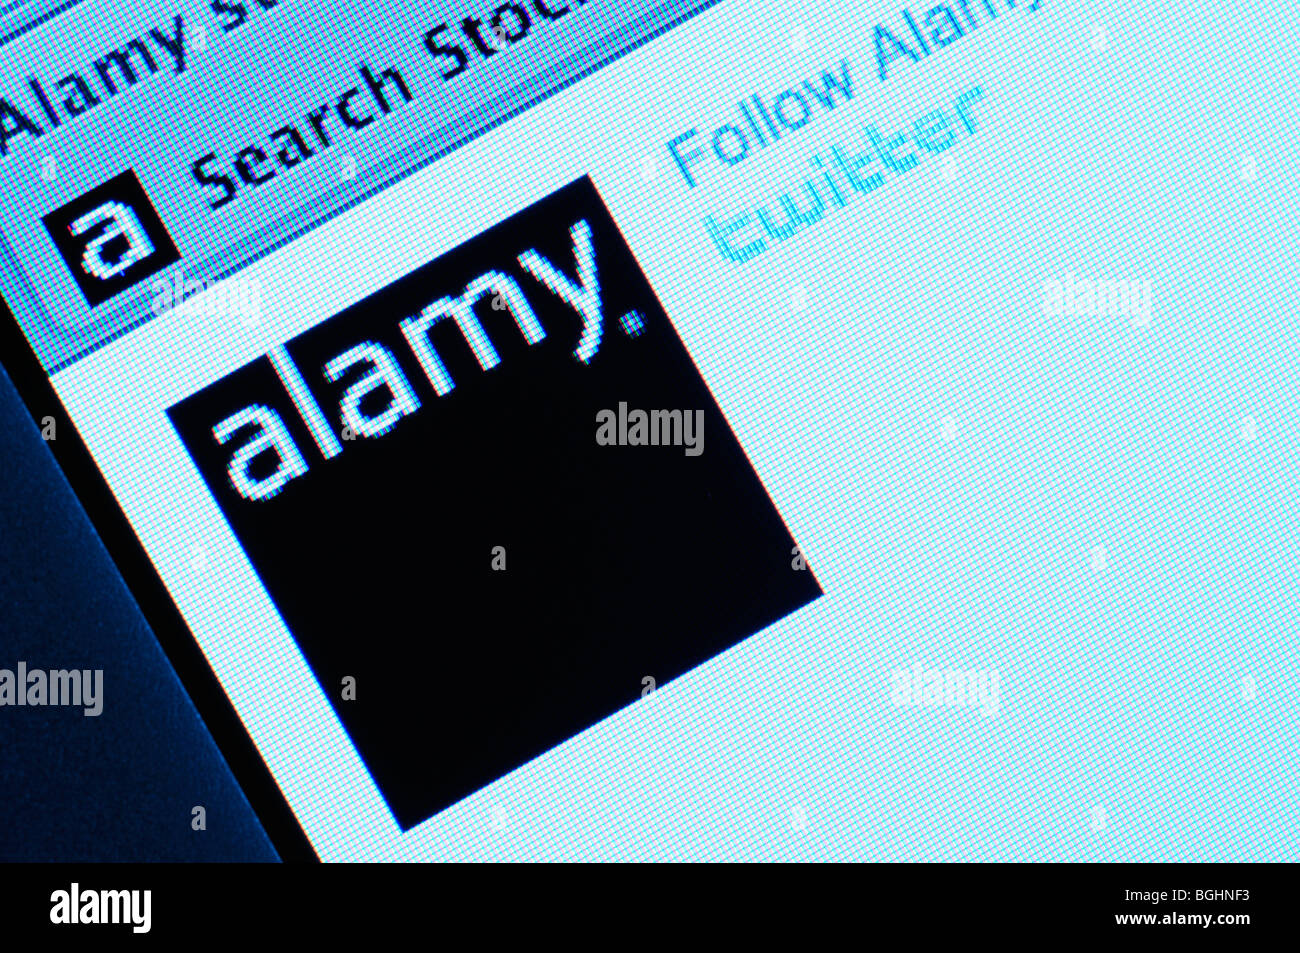 Alamy image agency website Stock Photo